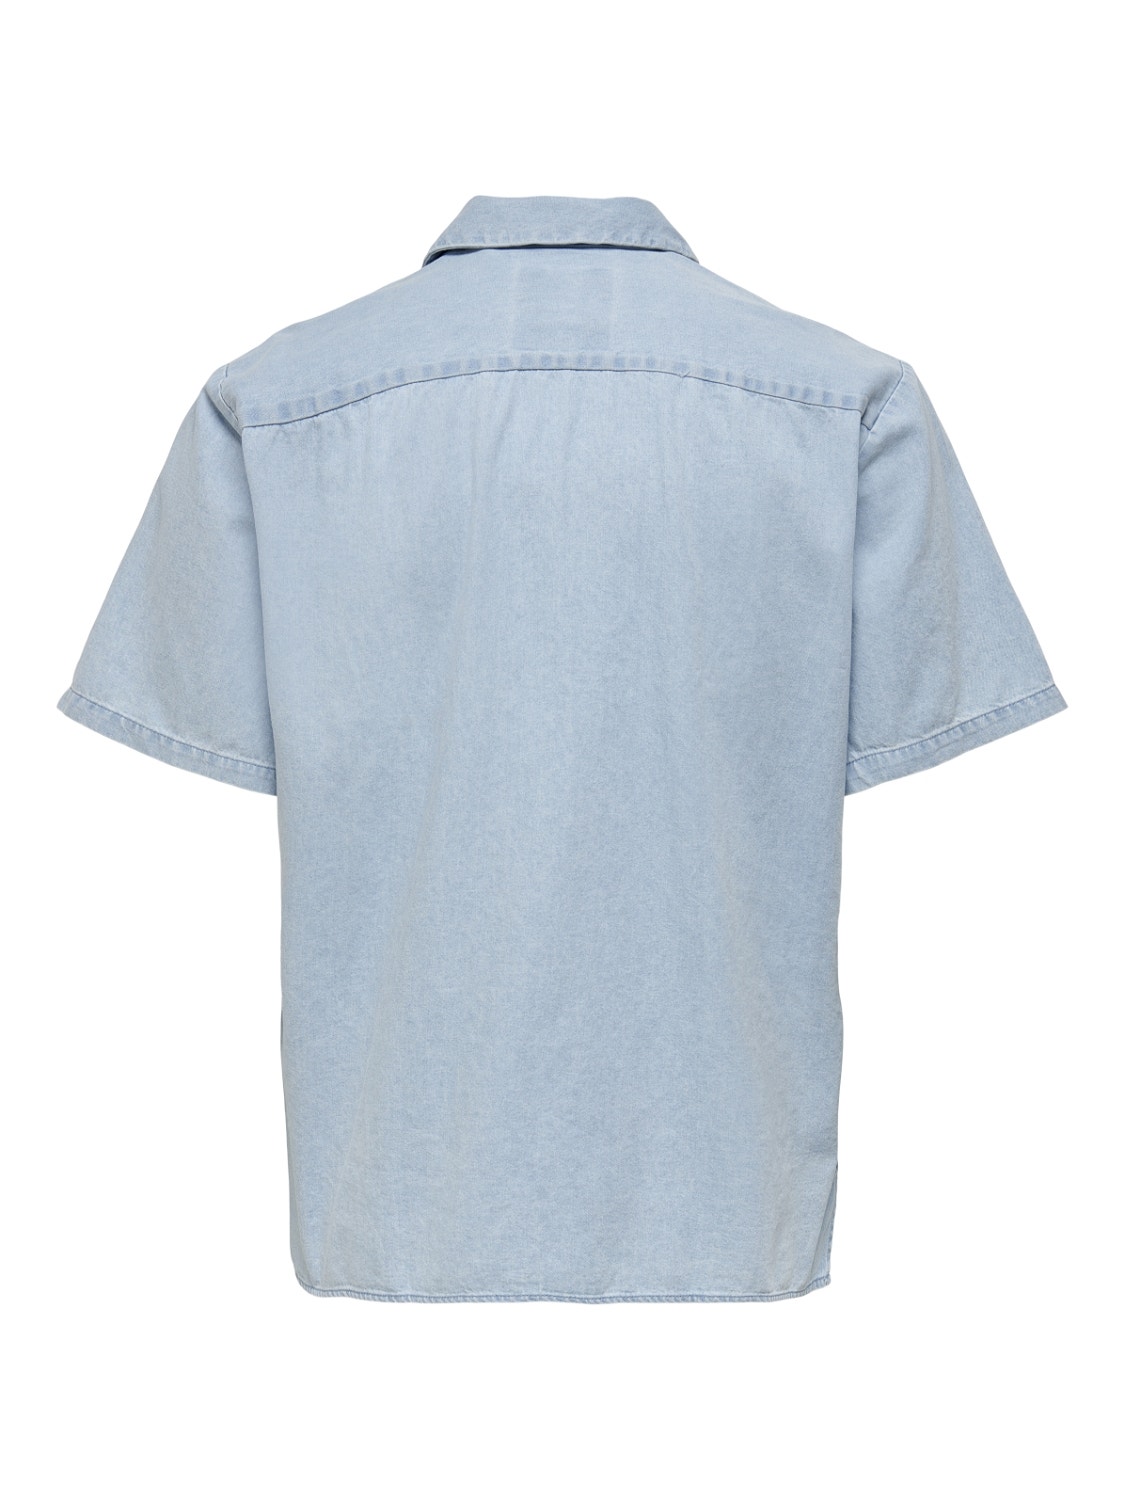 ONLY & SONS Camisas Corte regular Cuello de camisa -Blue Denim - 22022388